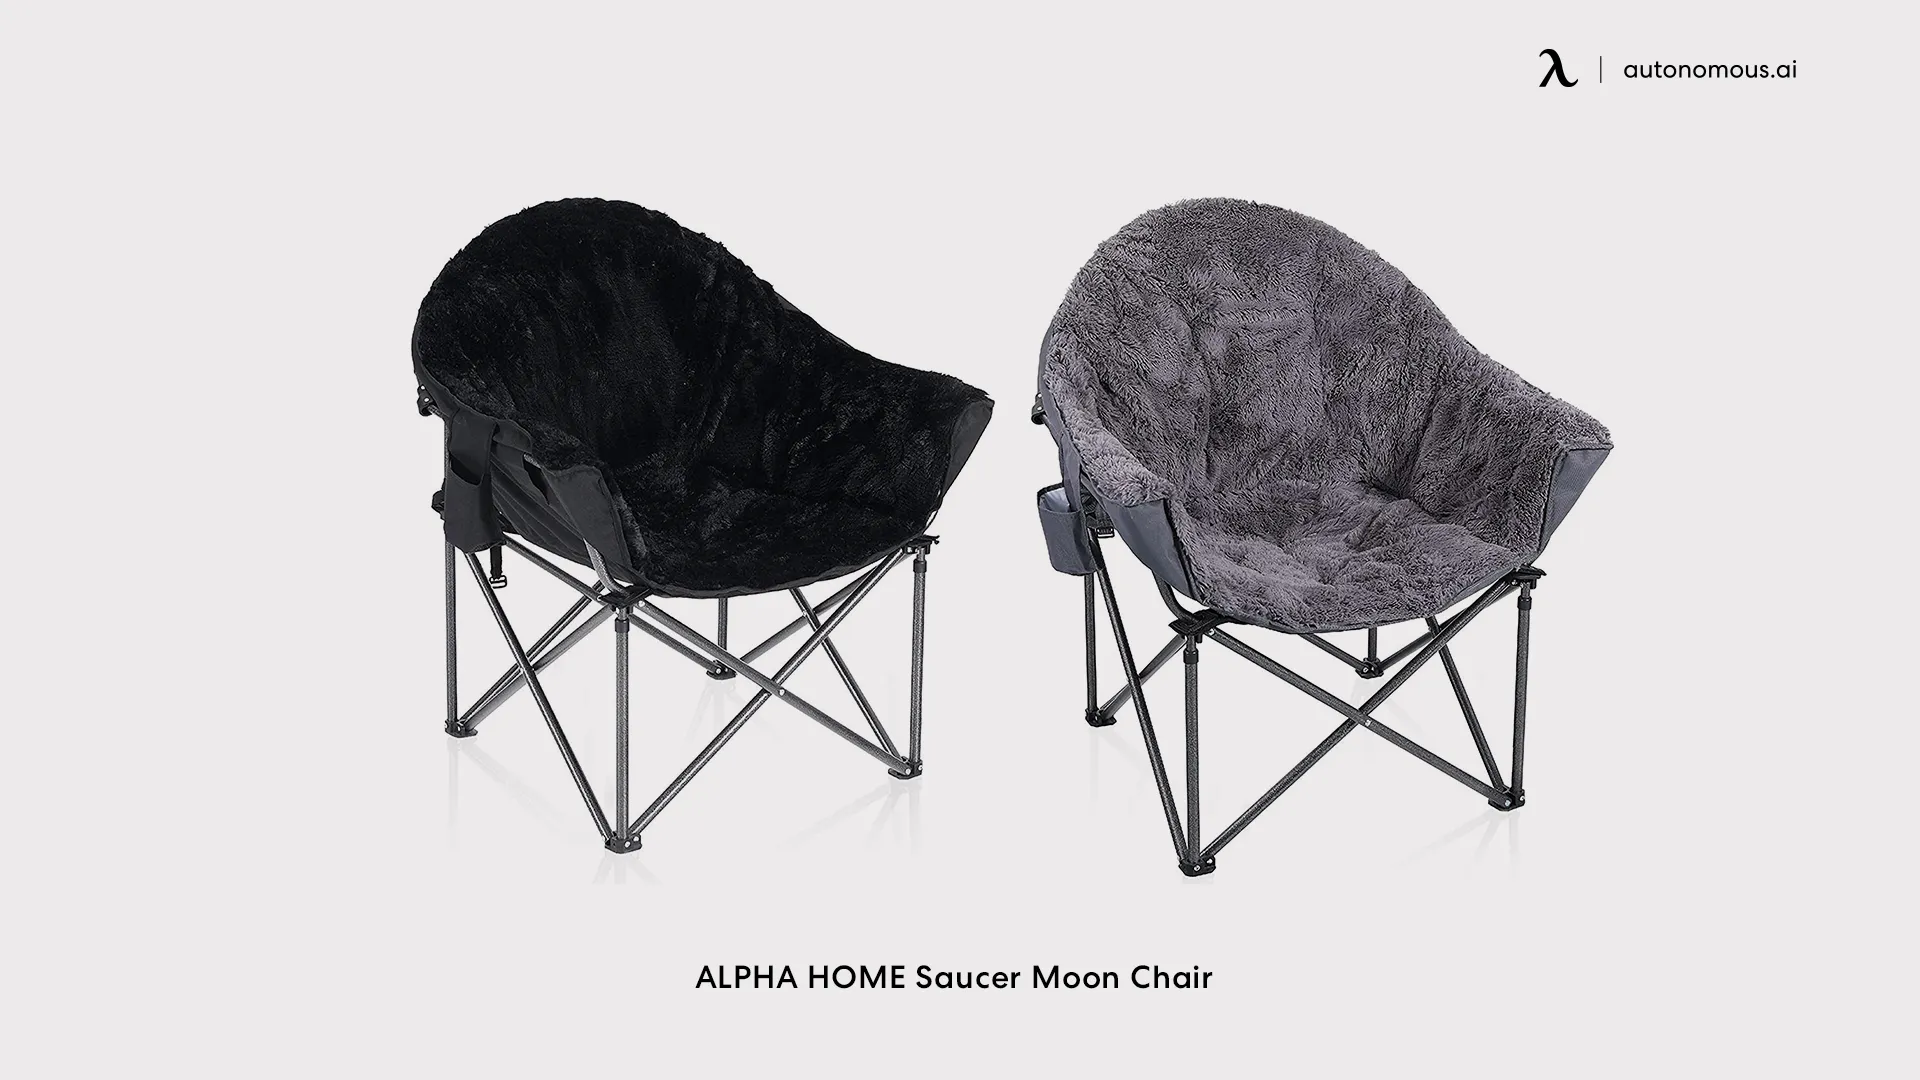 ALPHA HOME Saucer Moon Chair